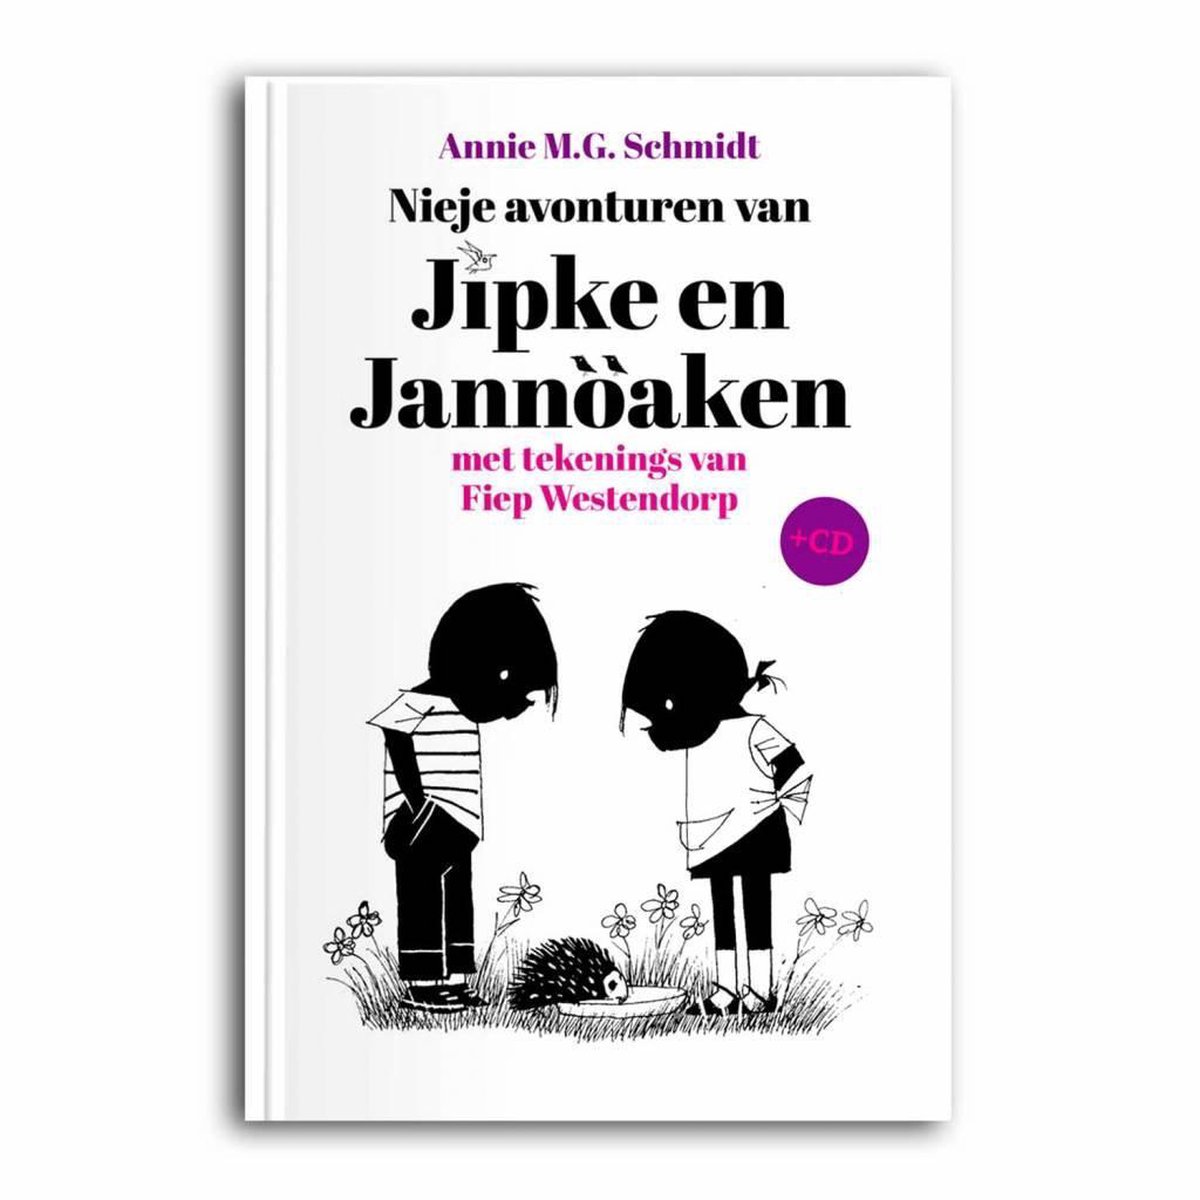 Jip en Janneke in het Twents - Jipke en Jannöaken (incl CD), Annie M.G.  Schmidt en... | bol.com